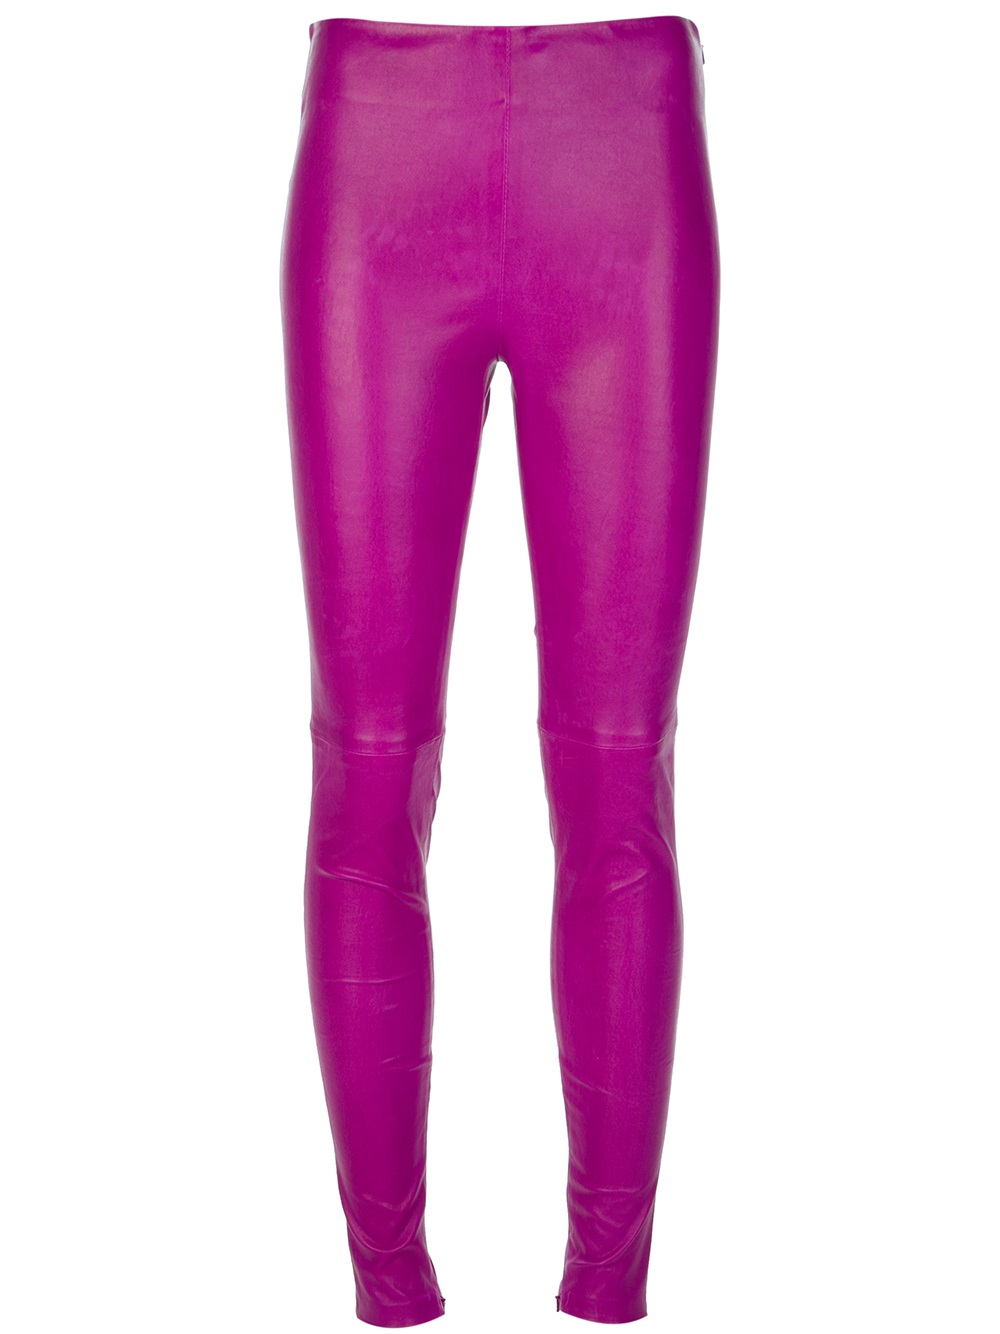 Balenciaga Leggings in Pink & Purple (Purple) - Lyst